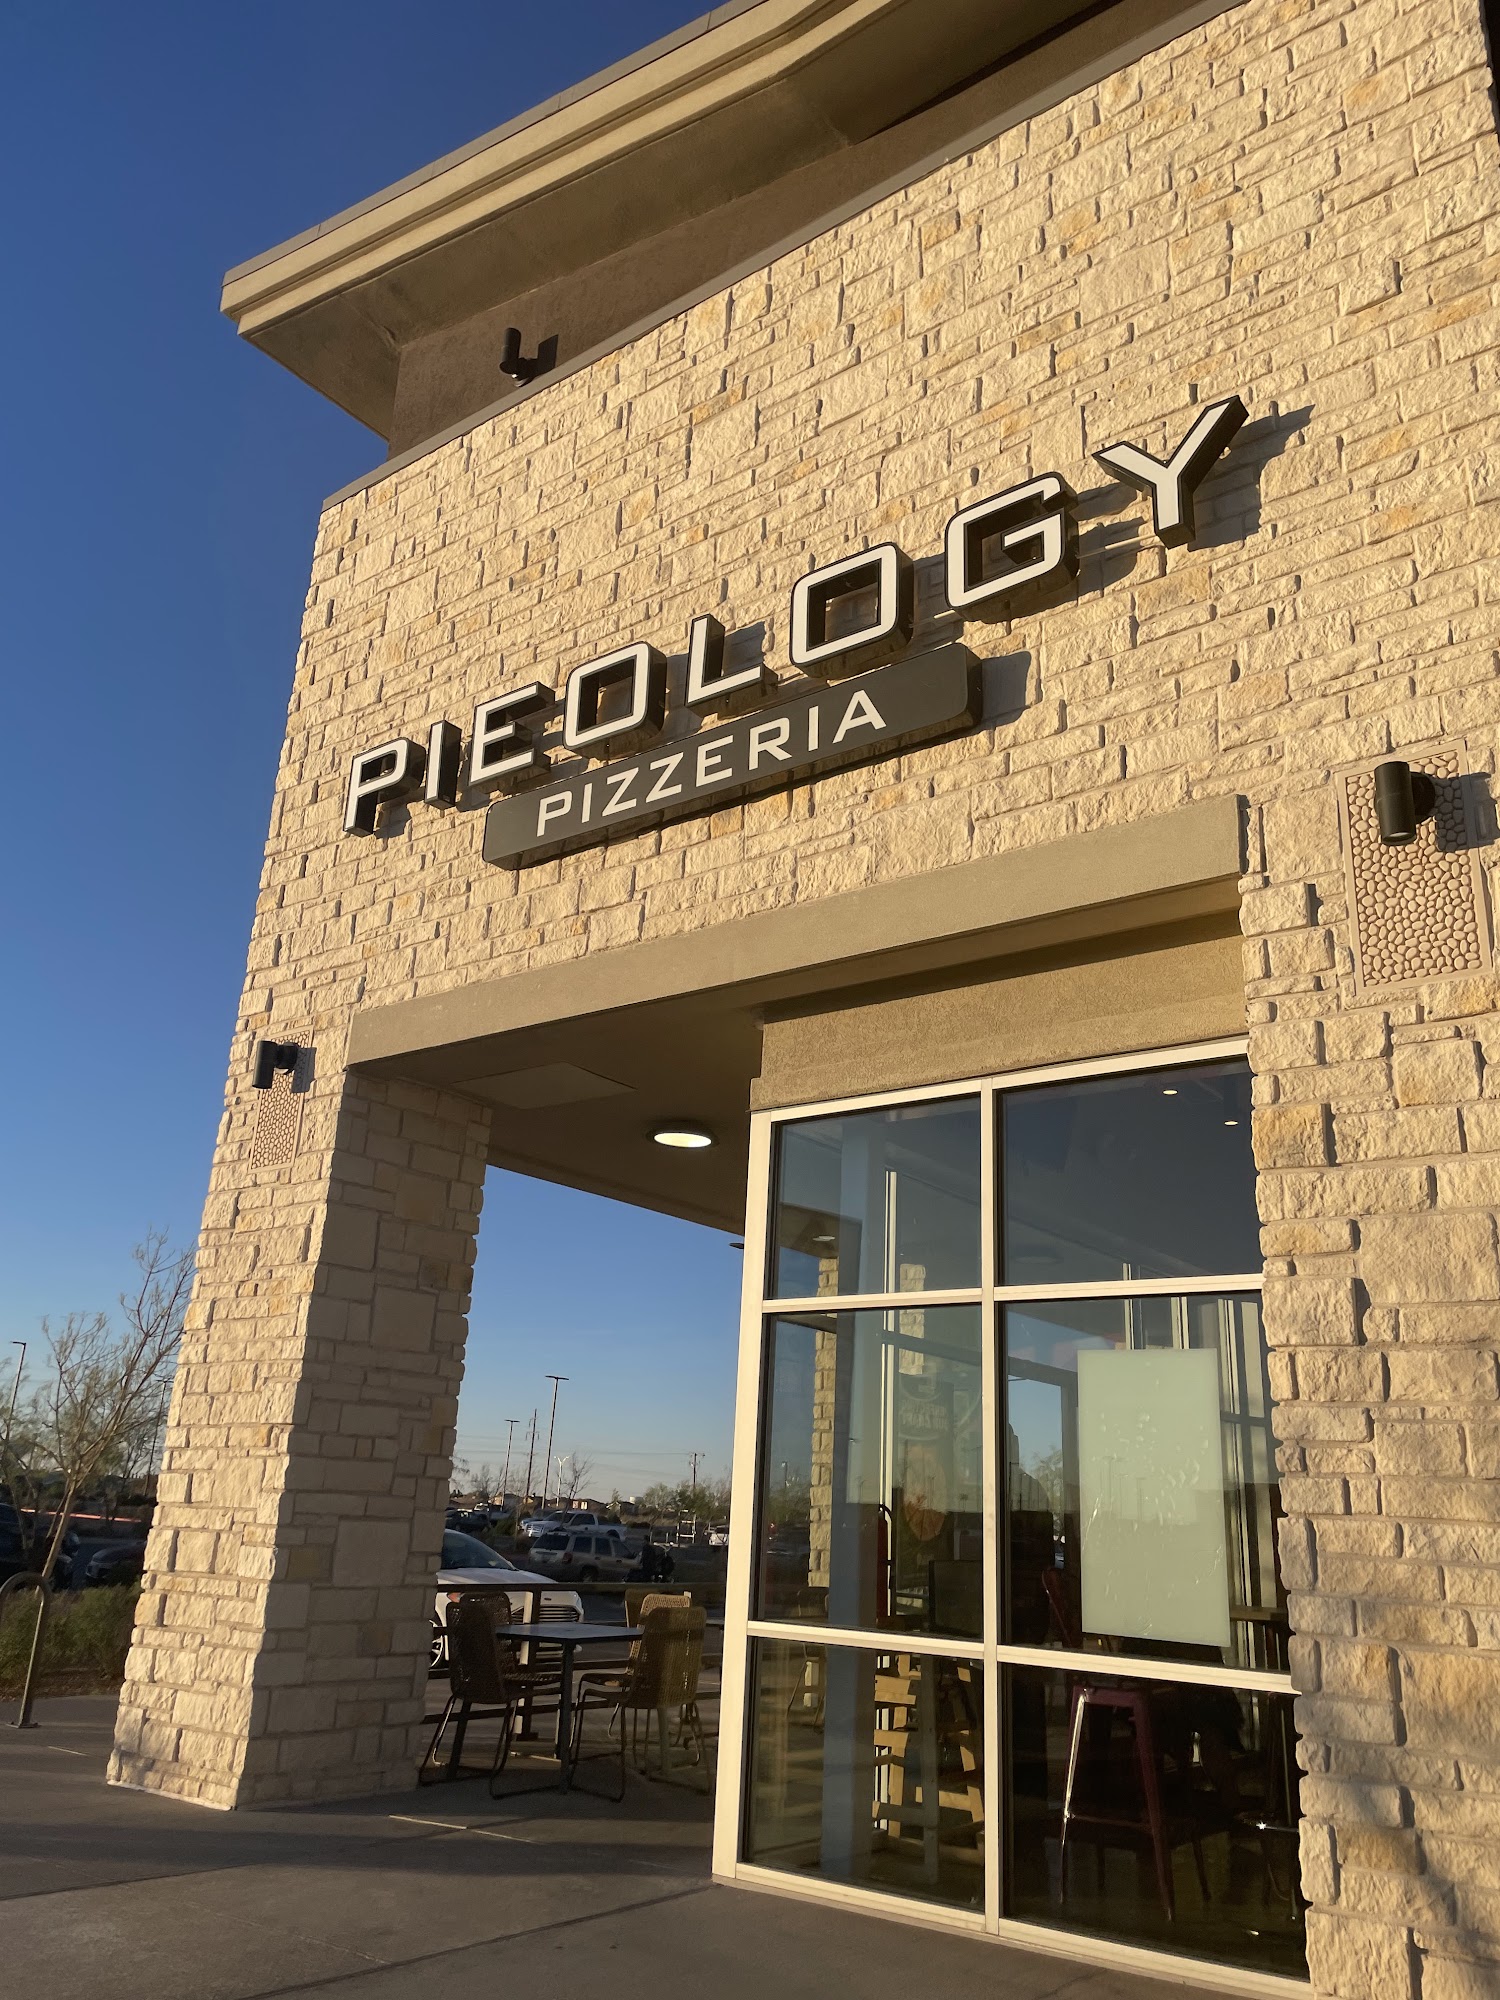 Pieology Pizzeria Pebble Hills, El Paso, TX